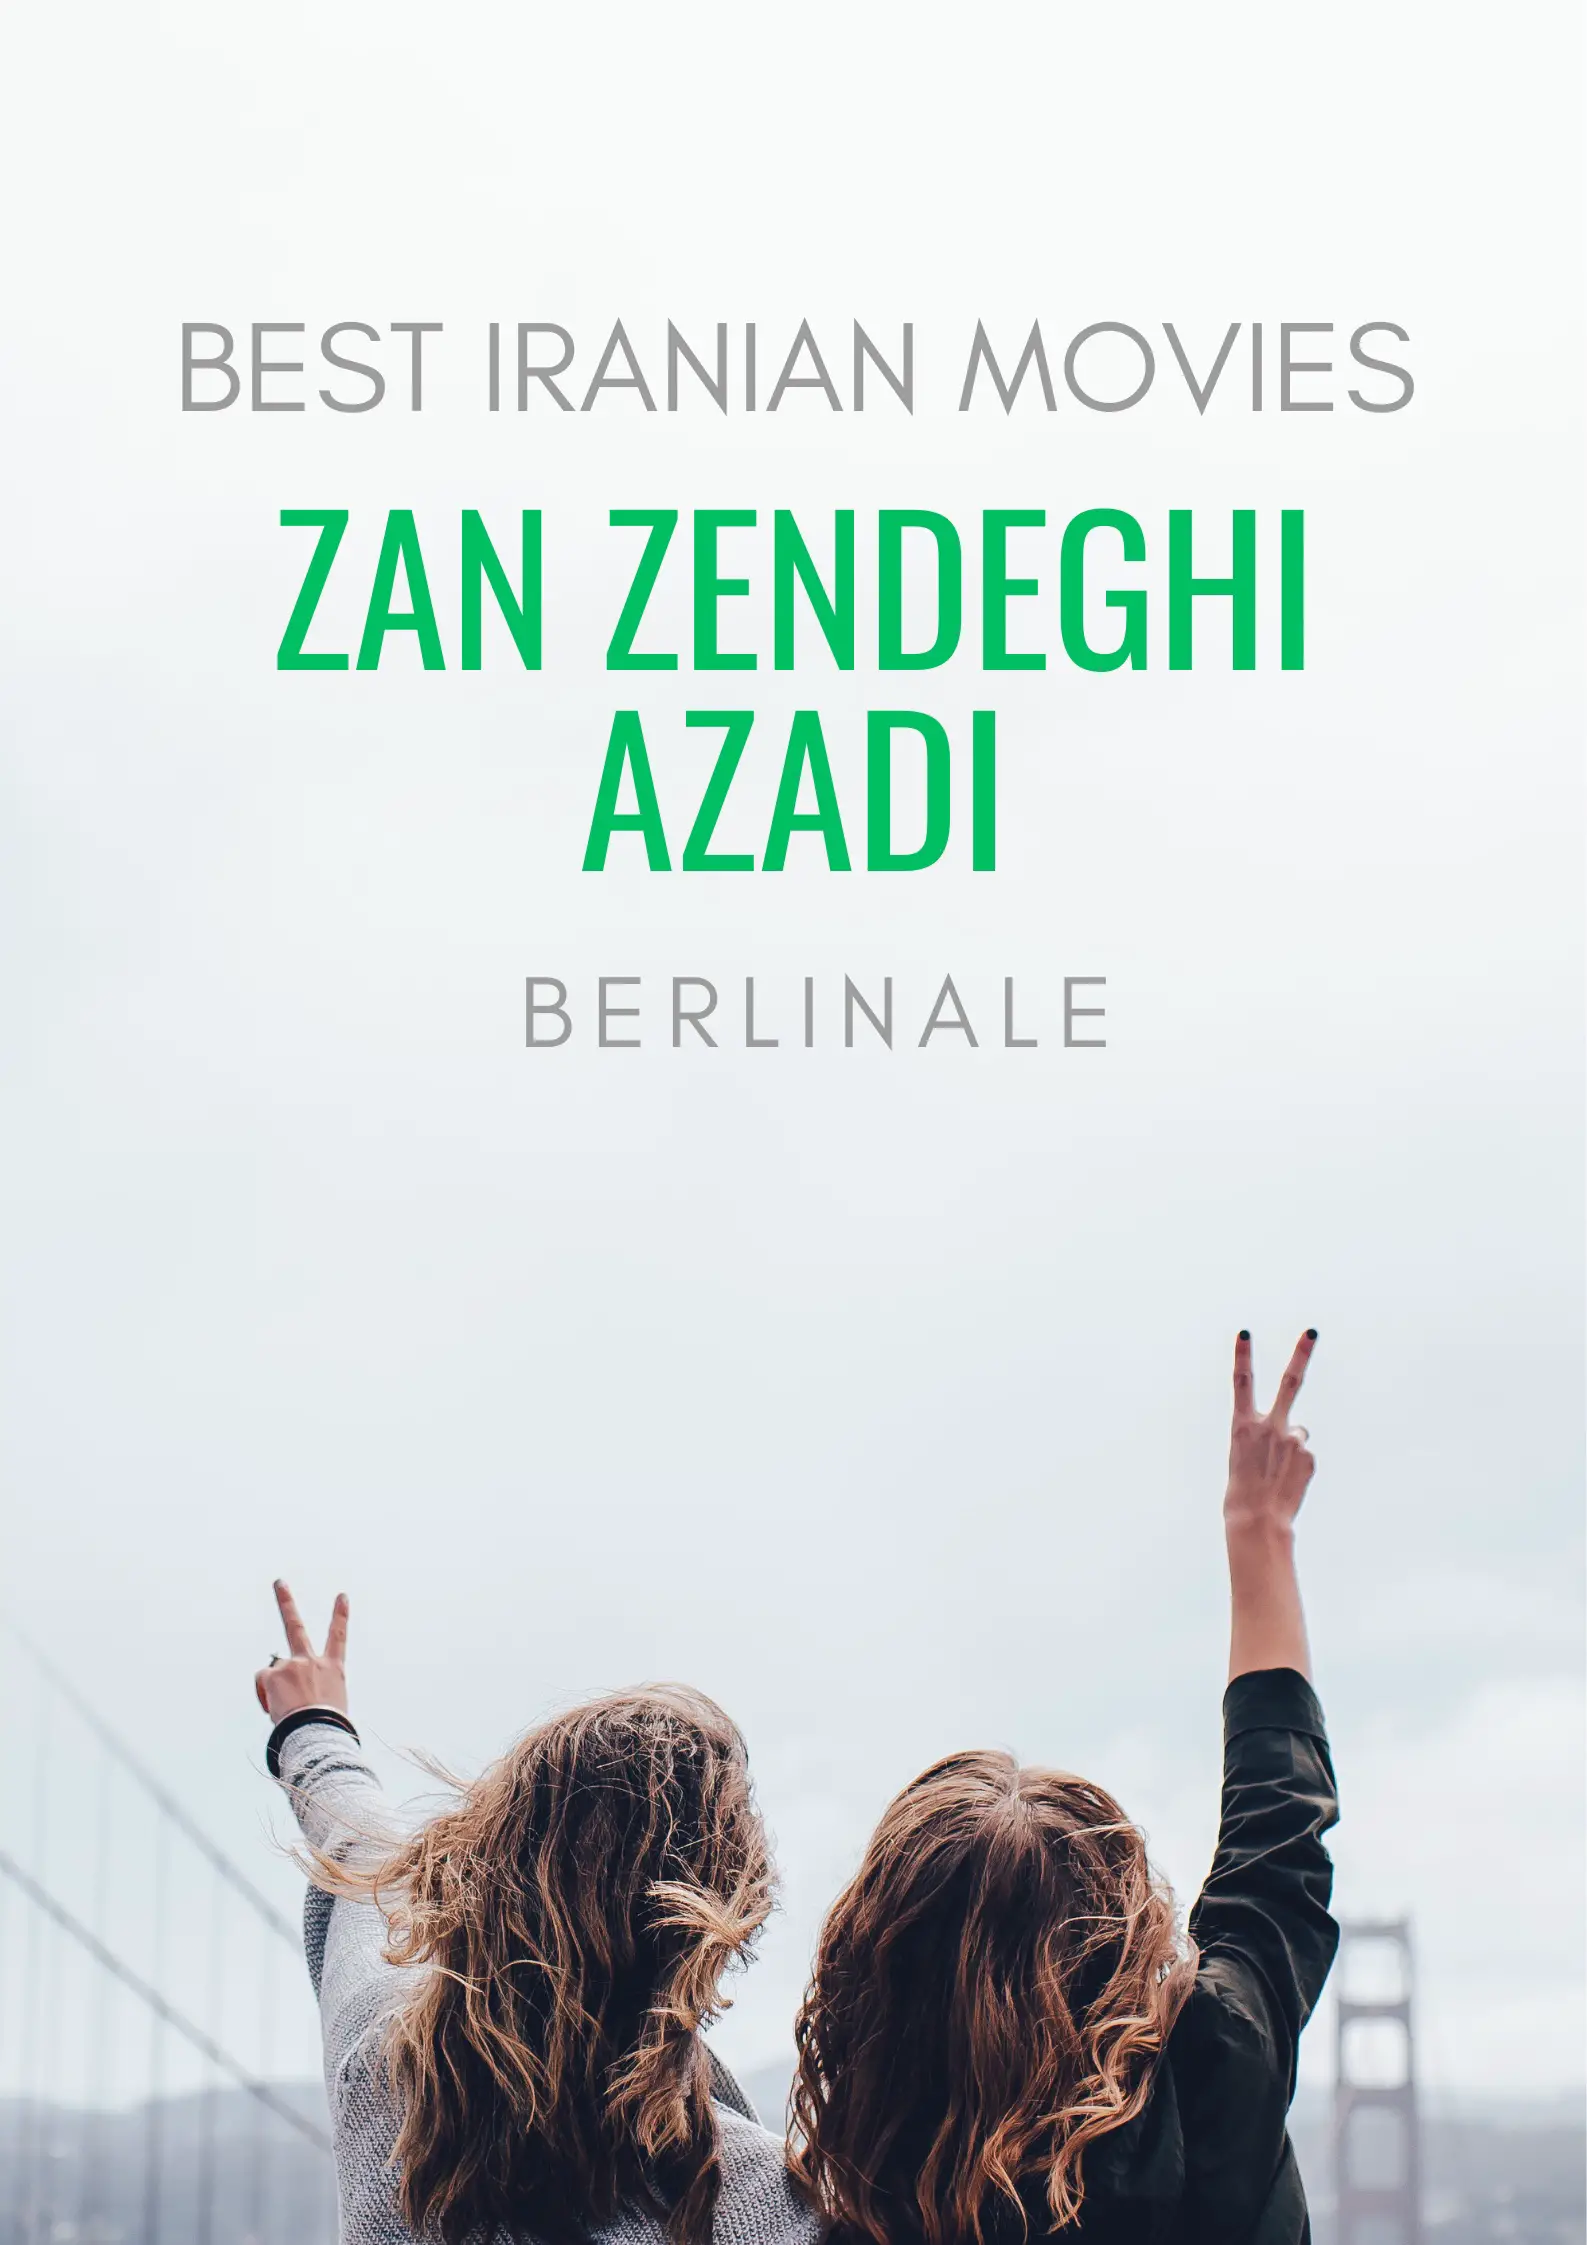 Best Iranian Movies Berlinale